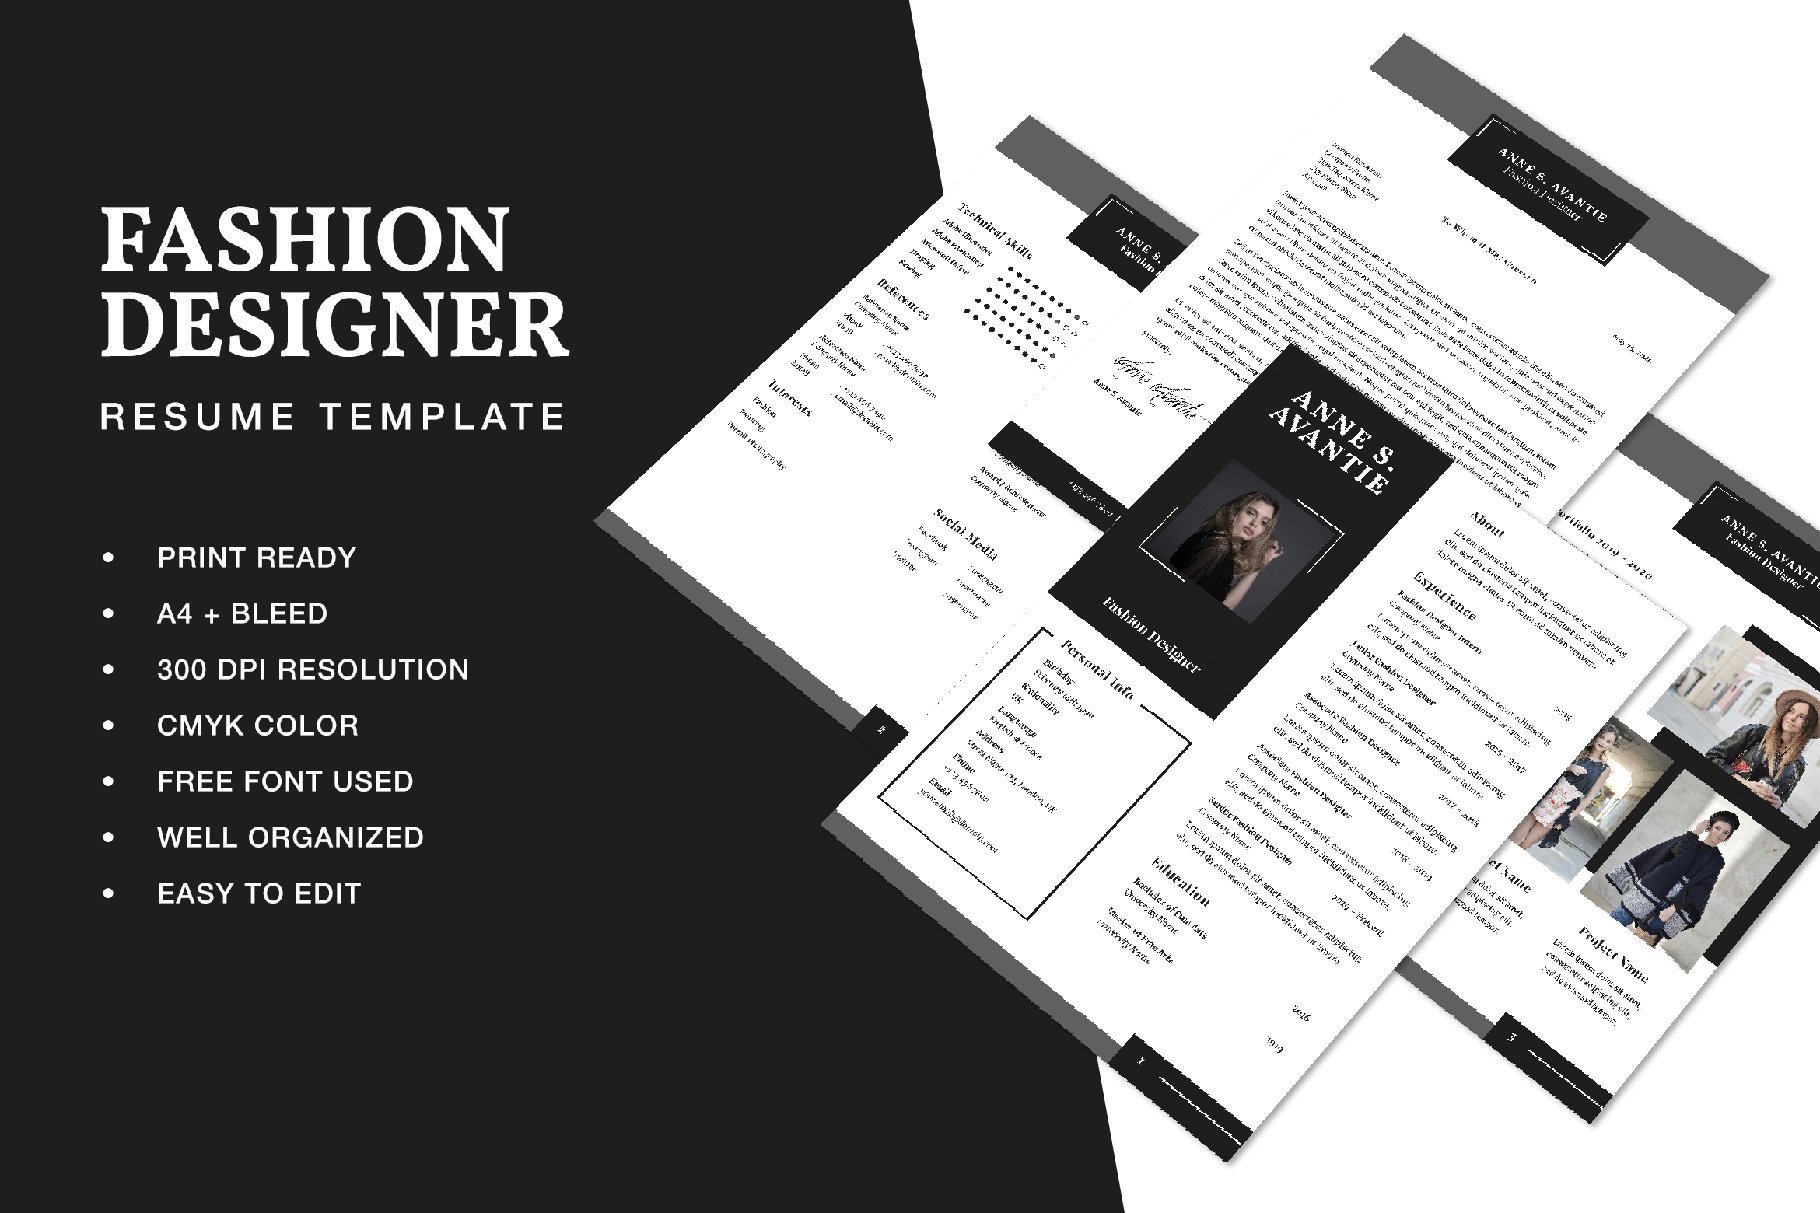 Fashion Designer Resume CV Template cover image.